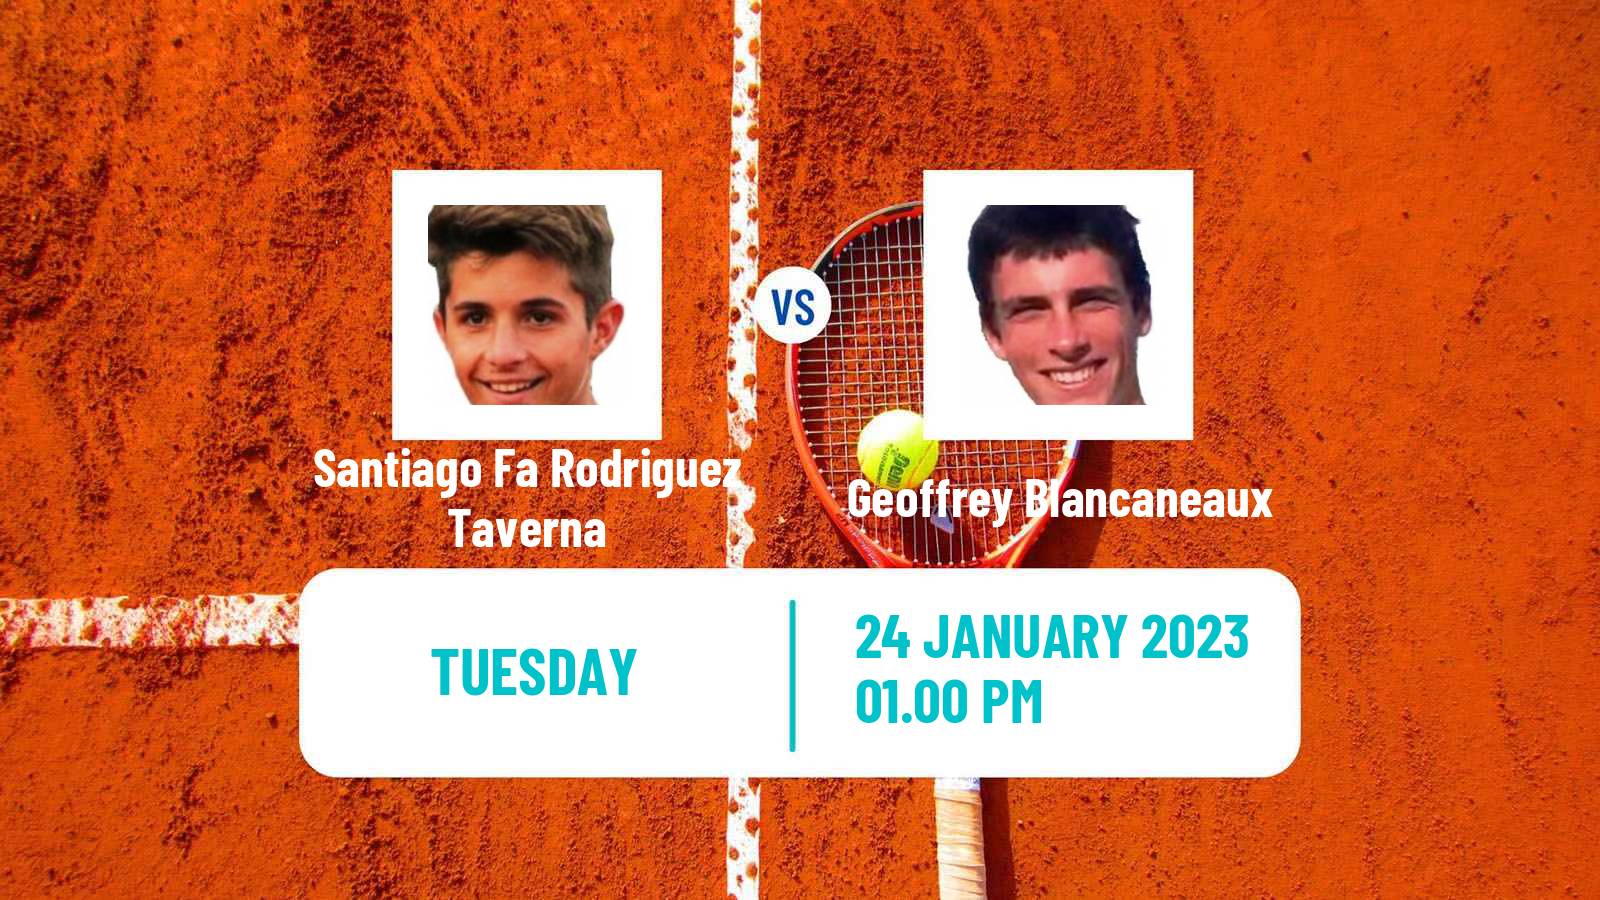 Tennis ATP Challenger Santiago Fa Rodriguez Taverna - Geoffrey Blancaneaux